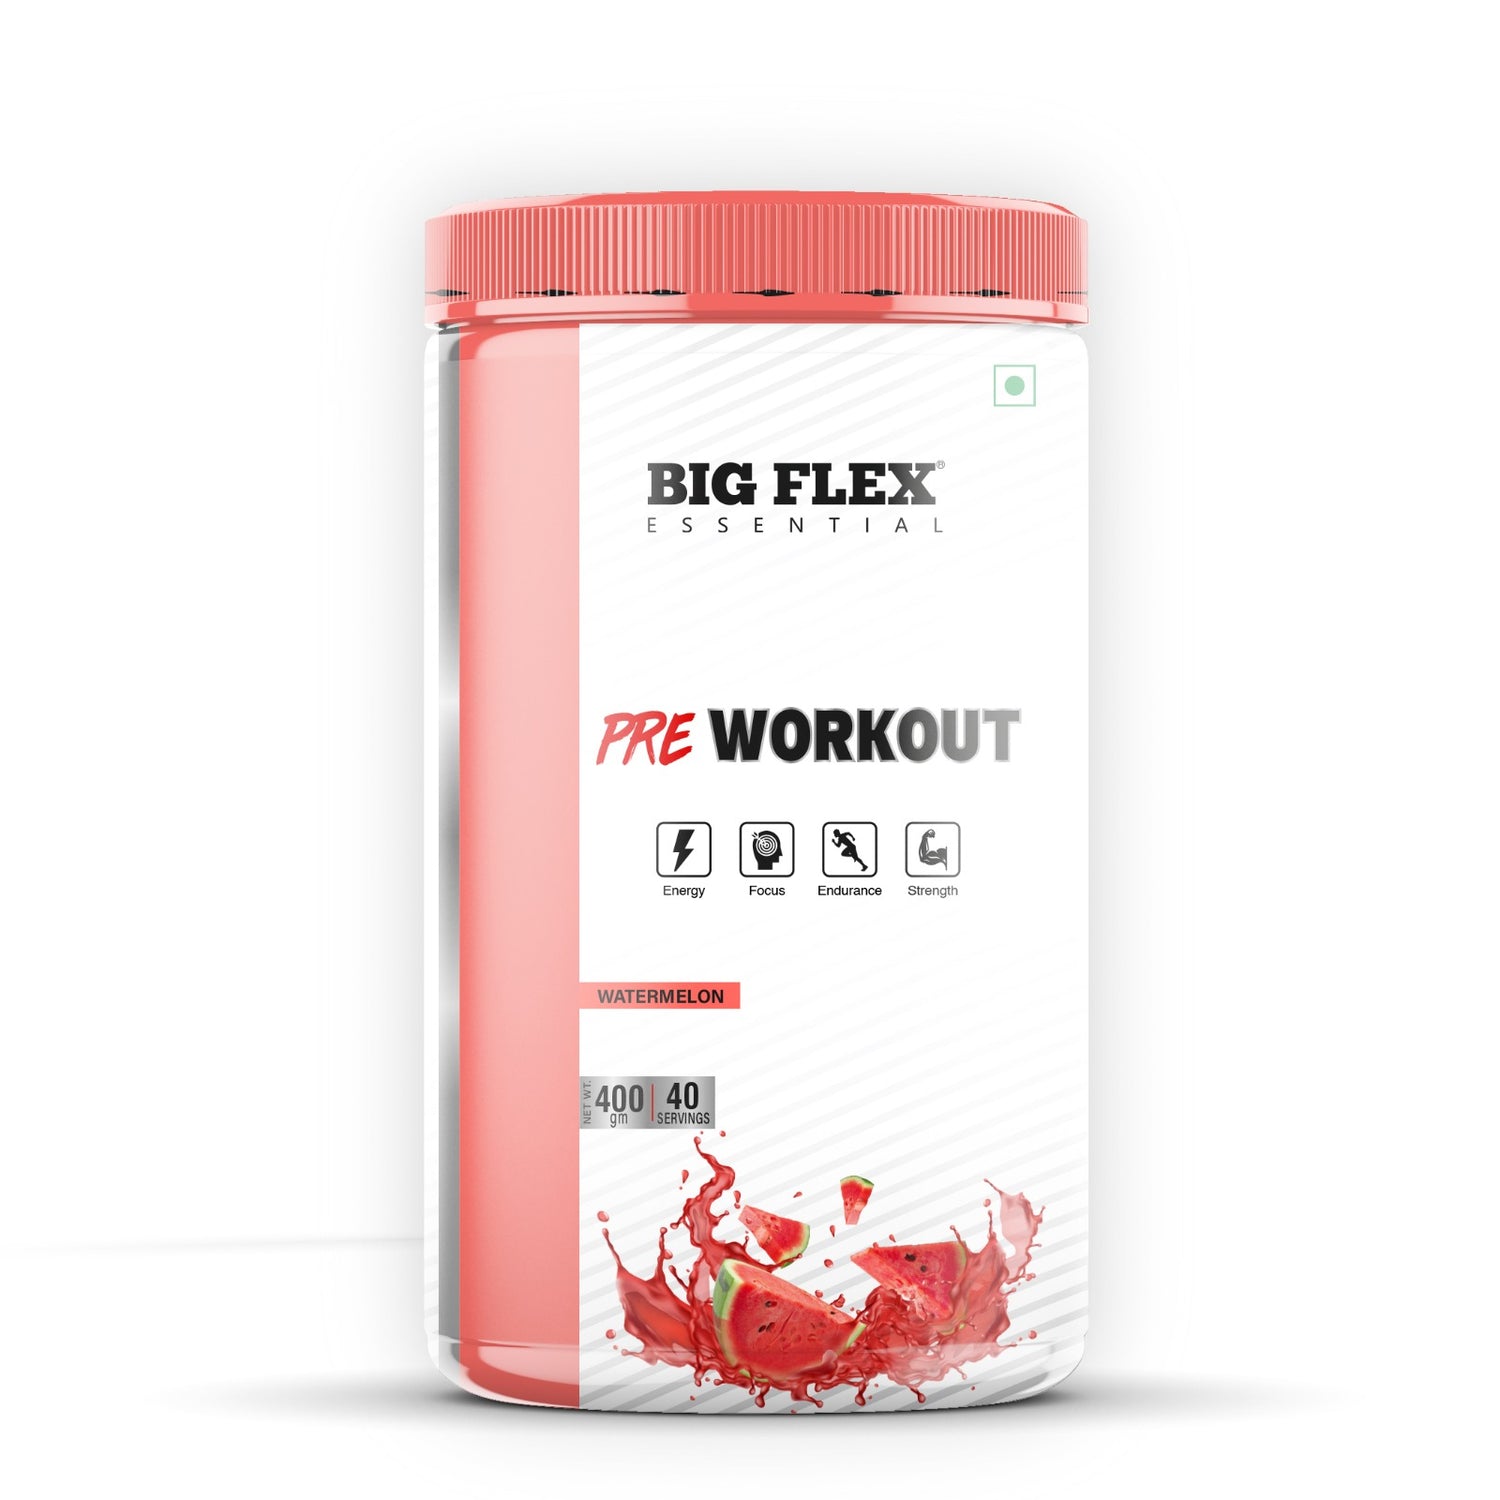 Bigflex Essential Pre - Workout. (400Gm) - Jar